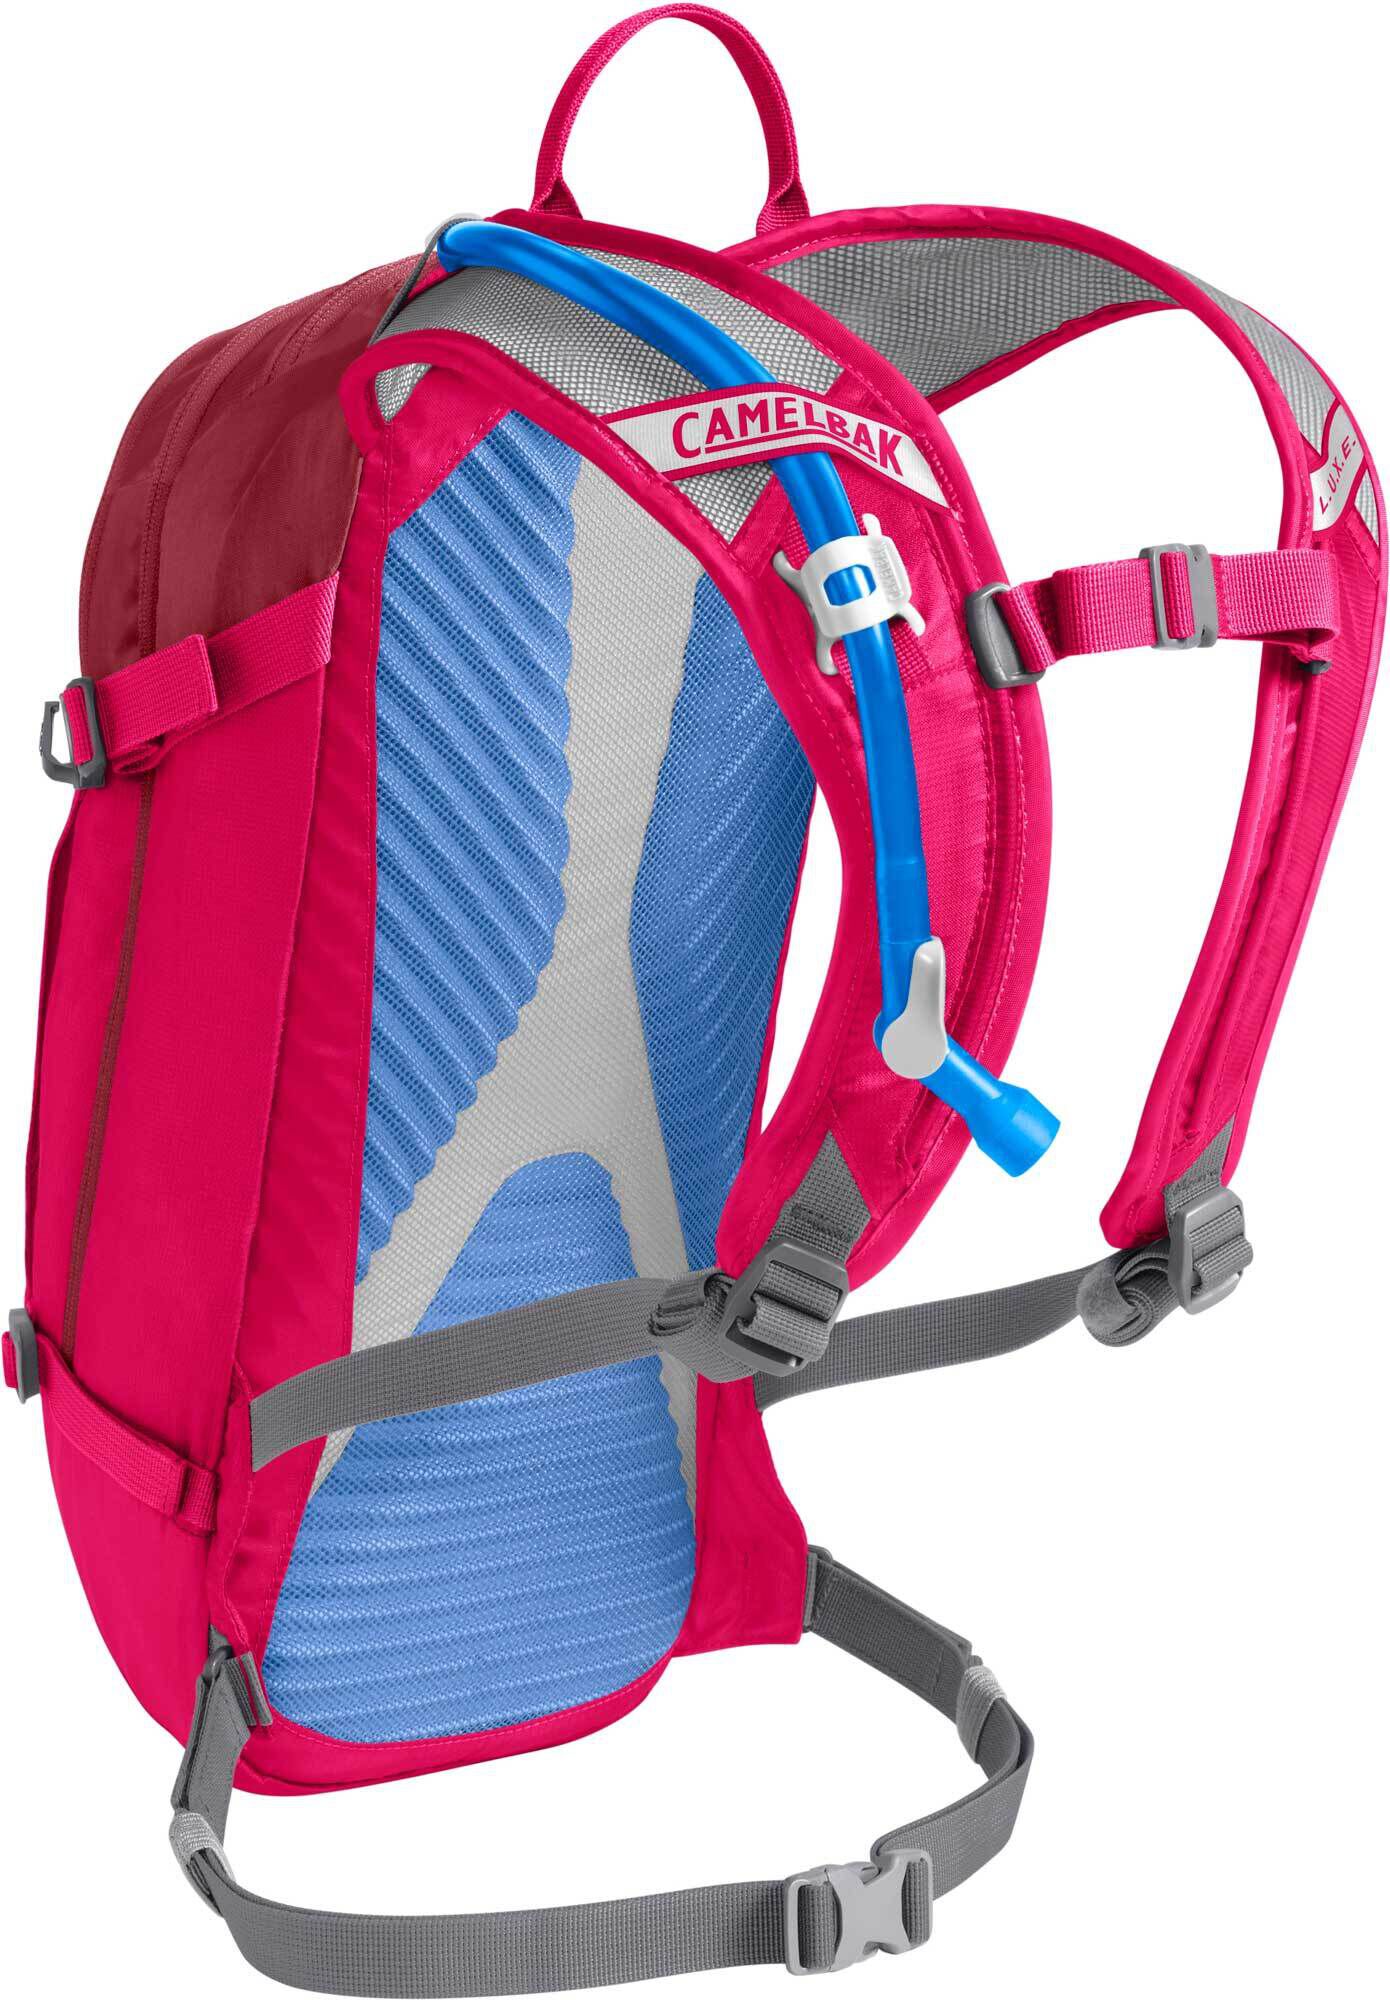 3L Water Bladder Bag Hydration System for Camelbak Backpack Hiking Camping vp 